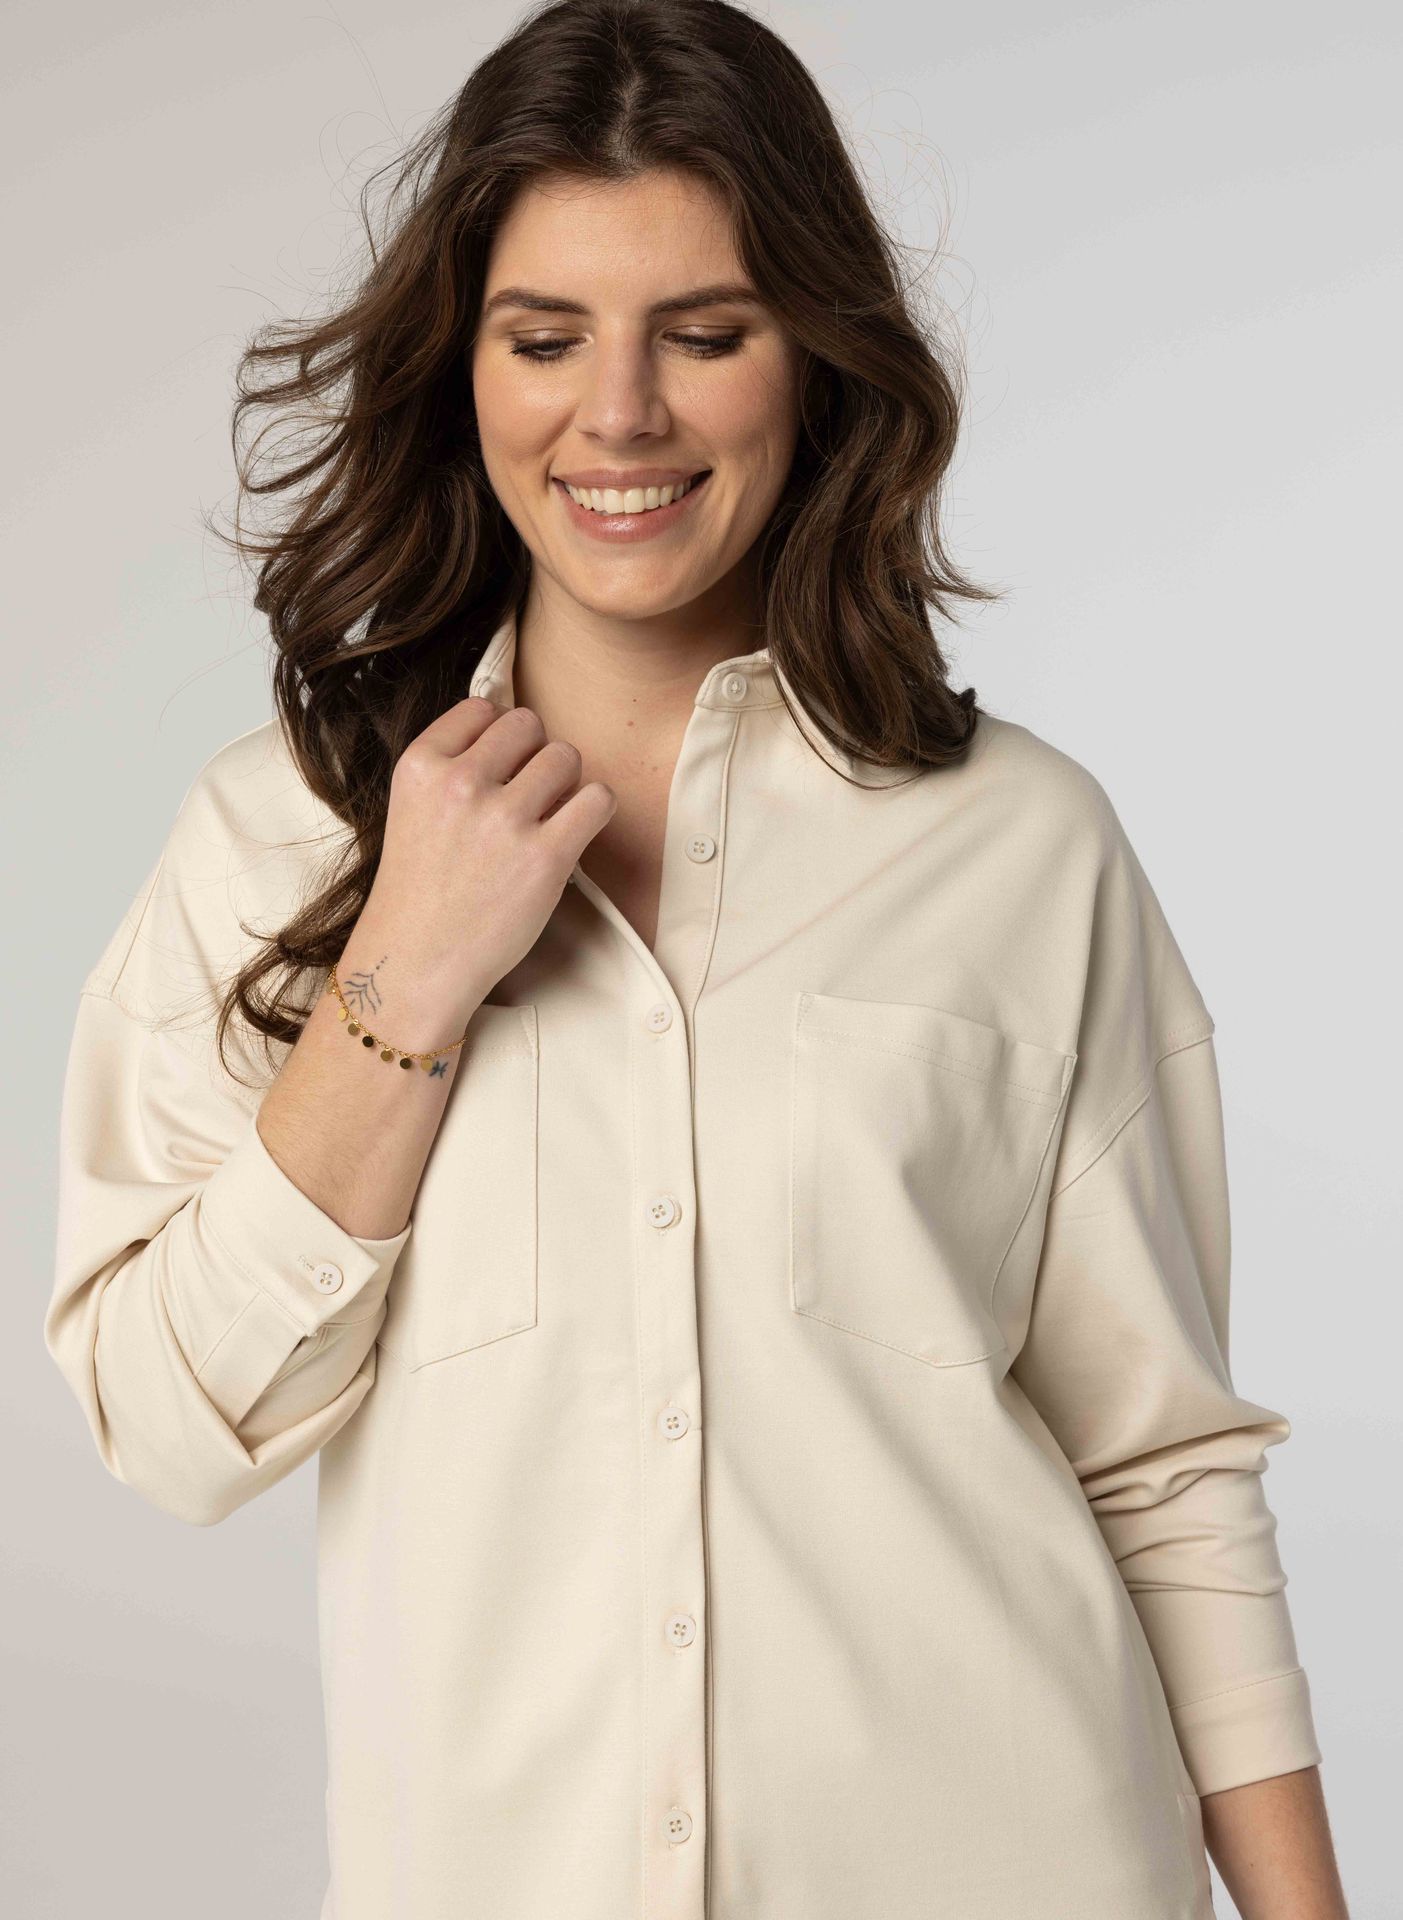 Norah Zandkleurige blouse light sand 213614-111